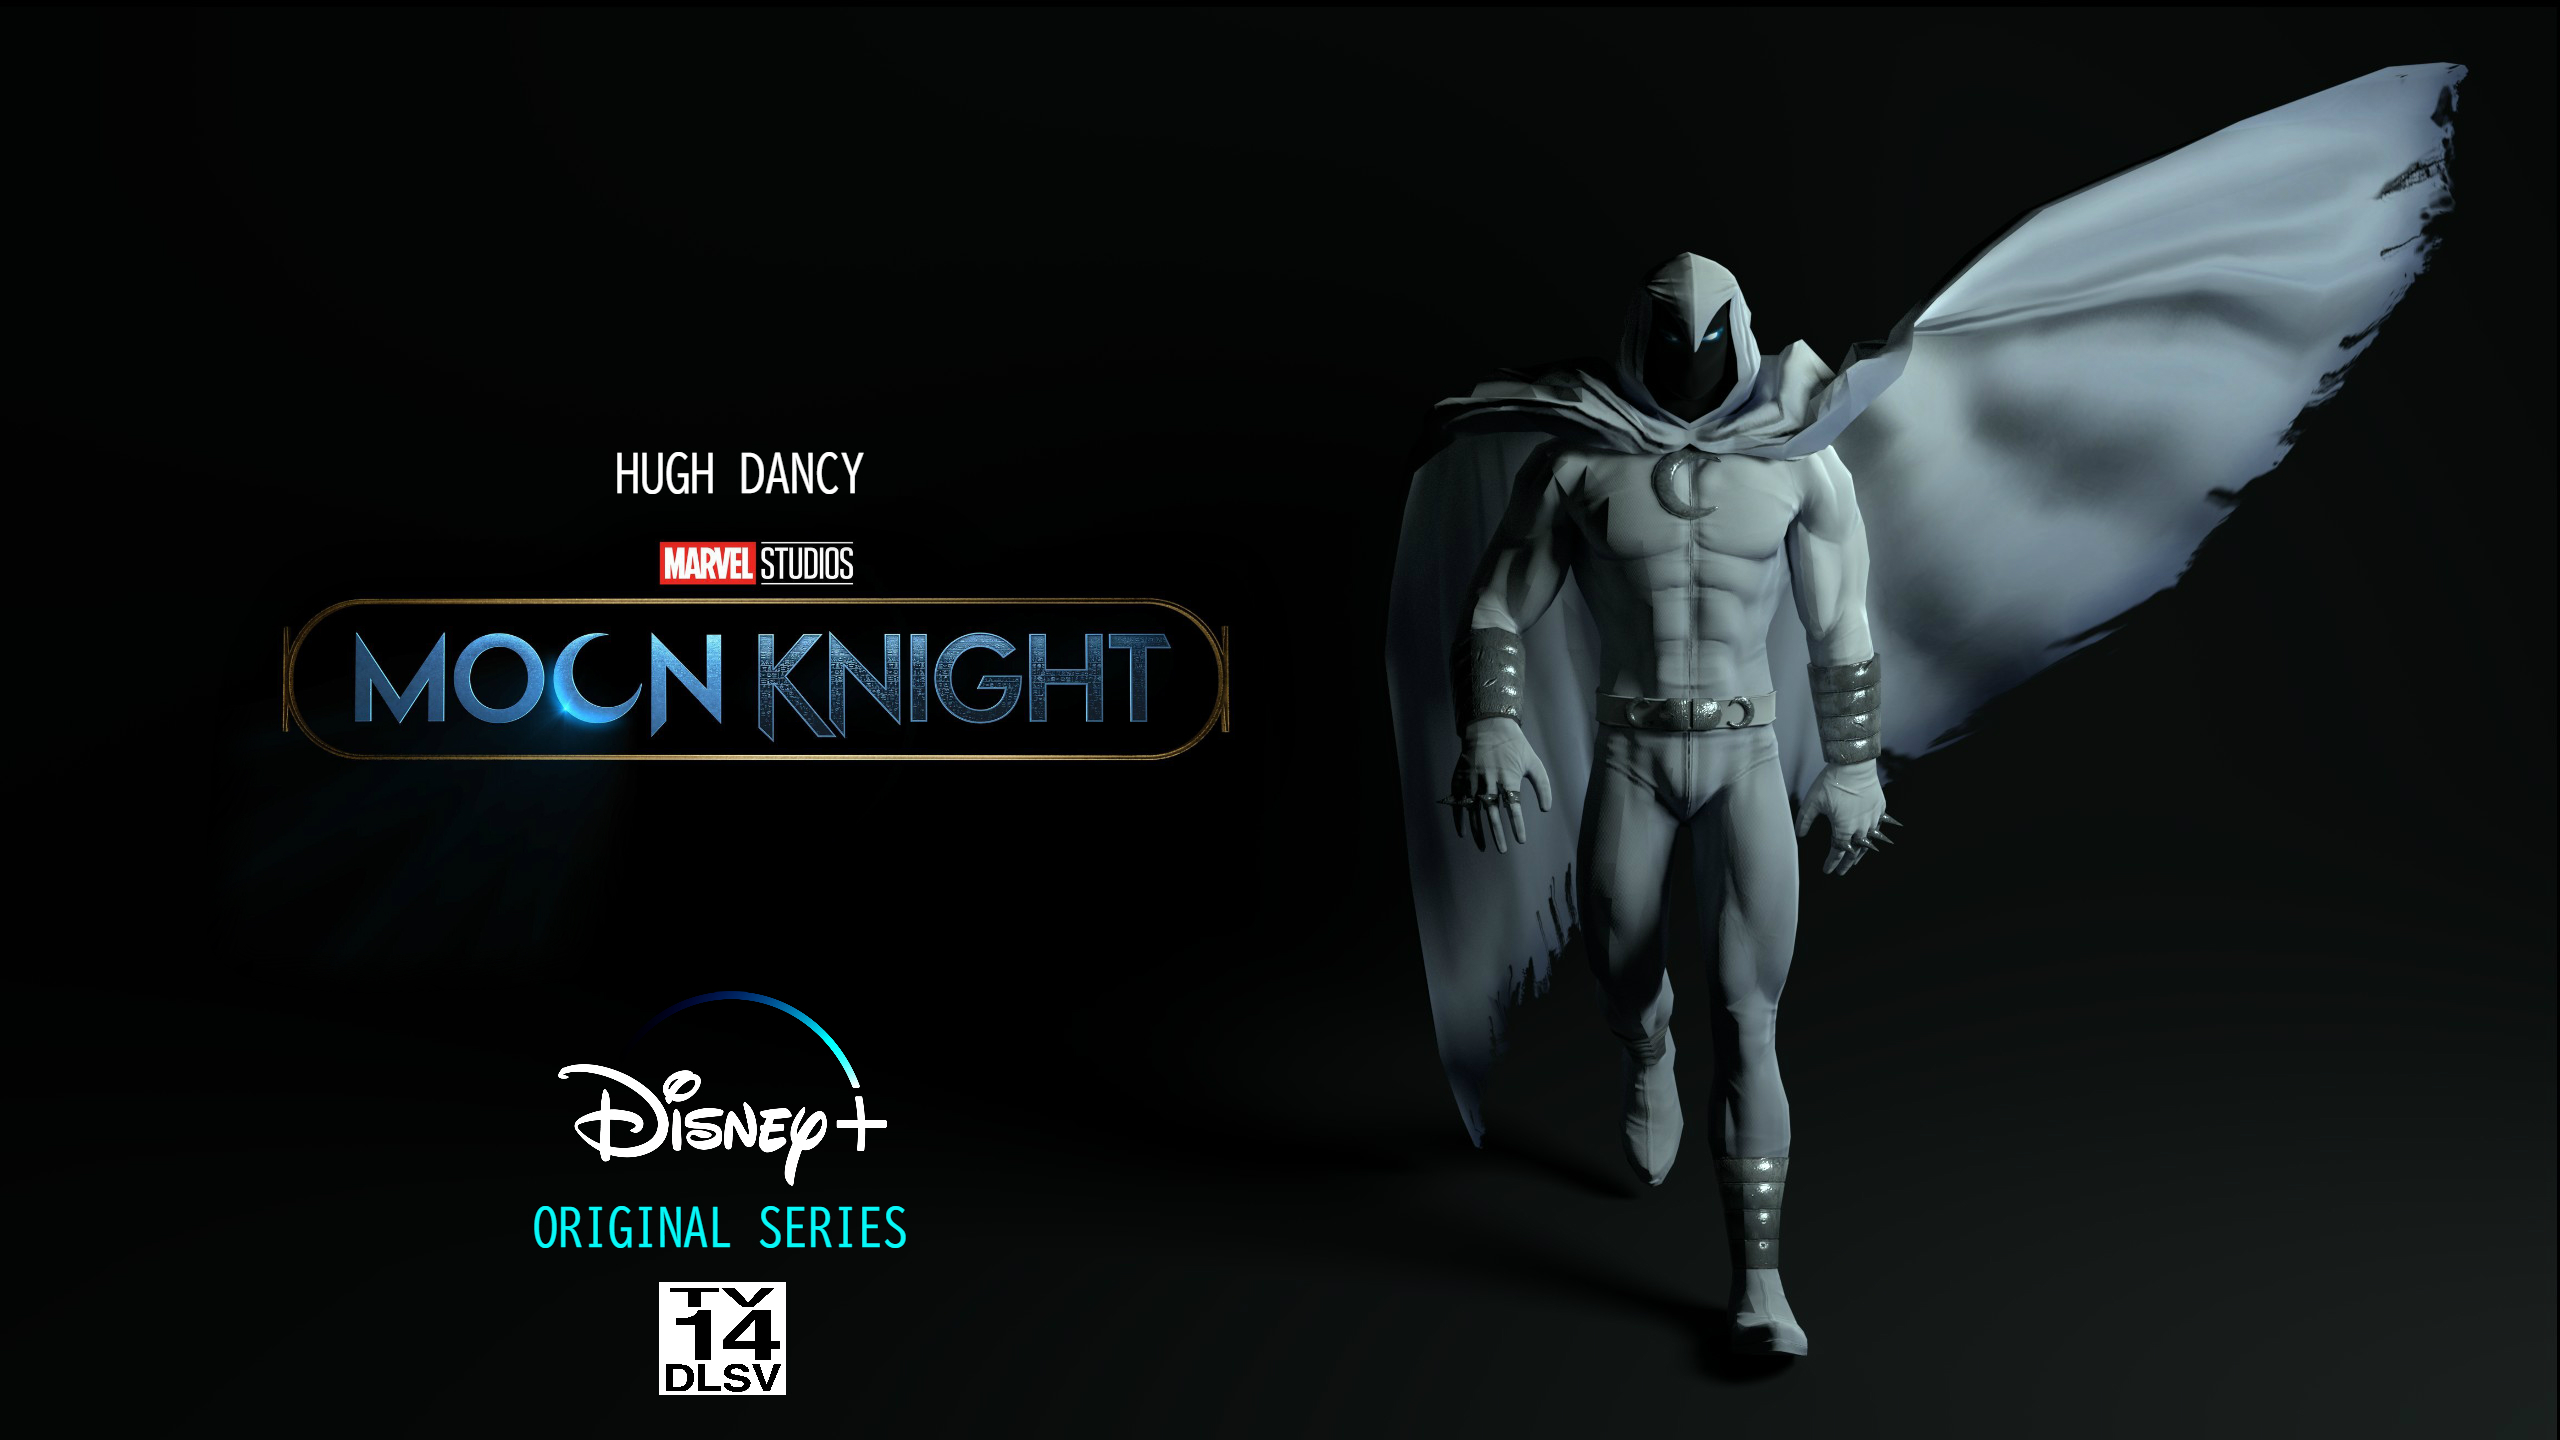 Marvel Studios Moon Knight Release Date. Disney + Original Series